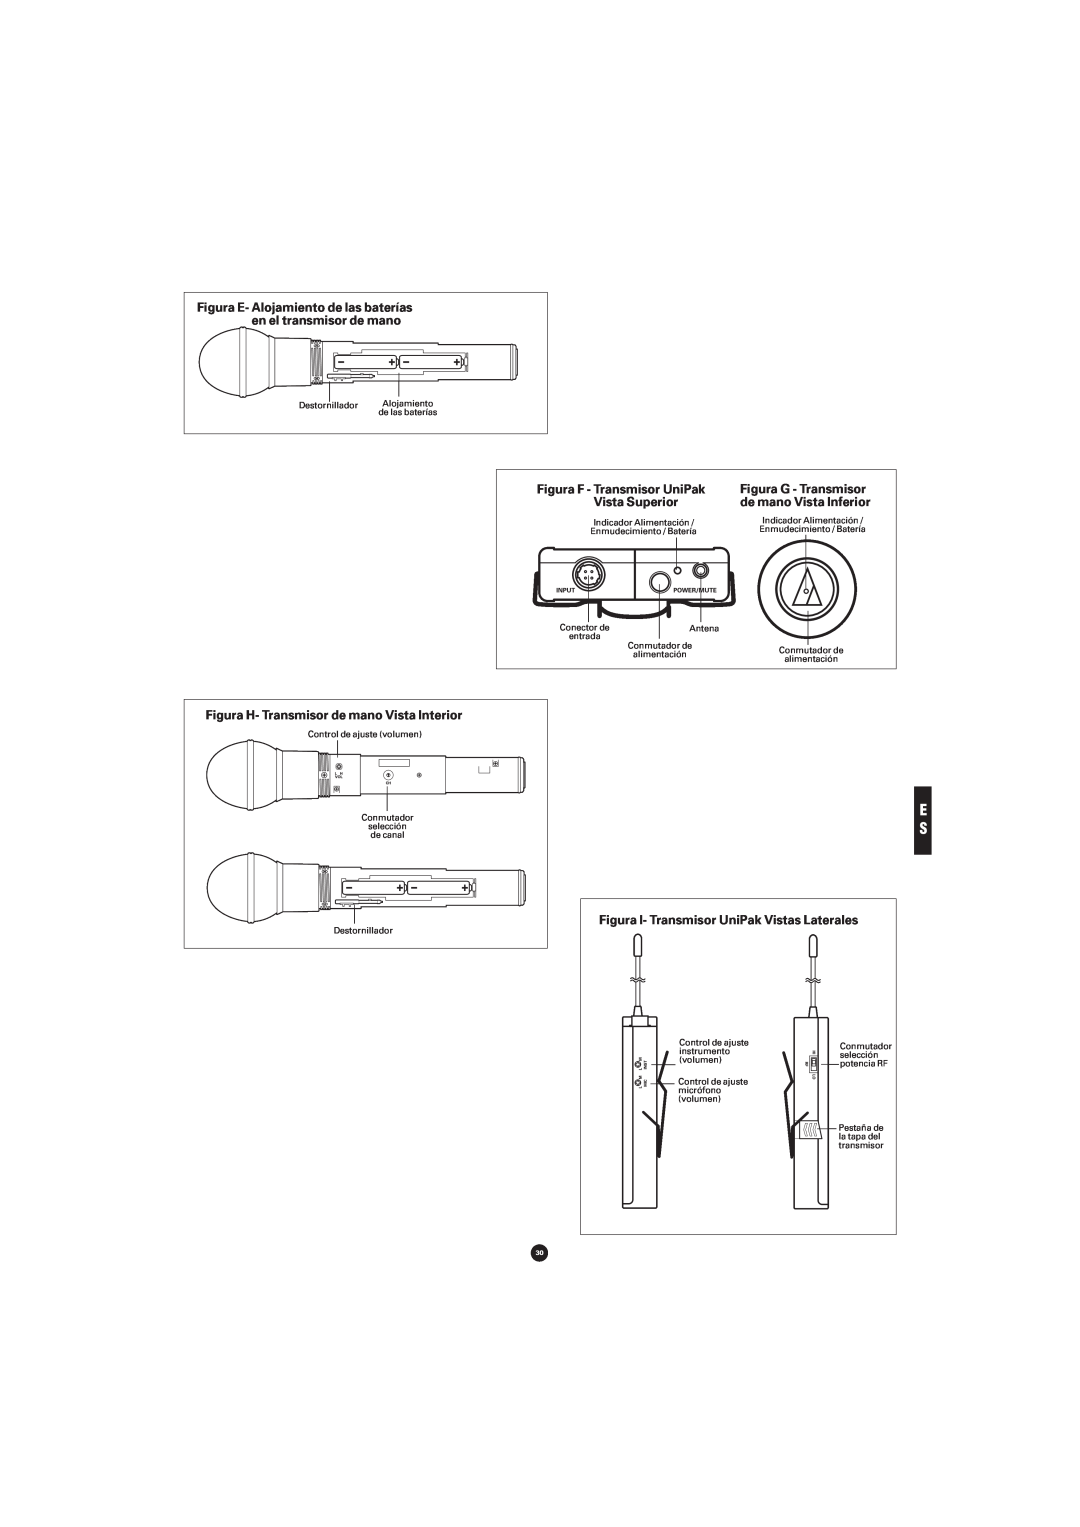 Audio-Technica ATW-702, ATW-701P Figura F - Transmisor UniPak, Vista Superior, Figura H- Transmisor de mano Vista Interior 